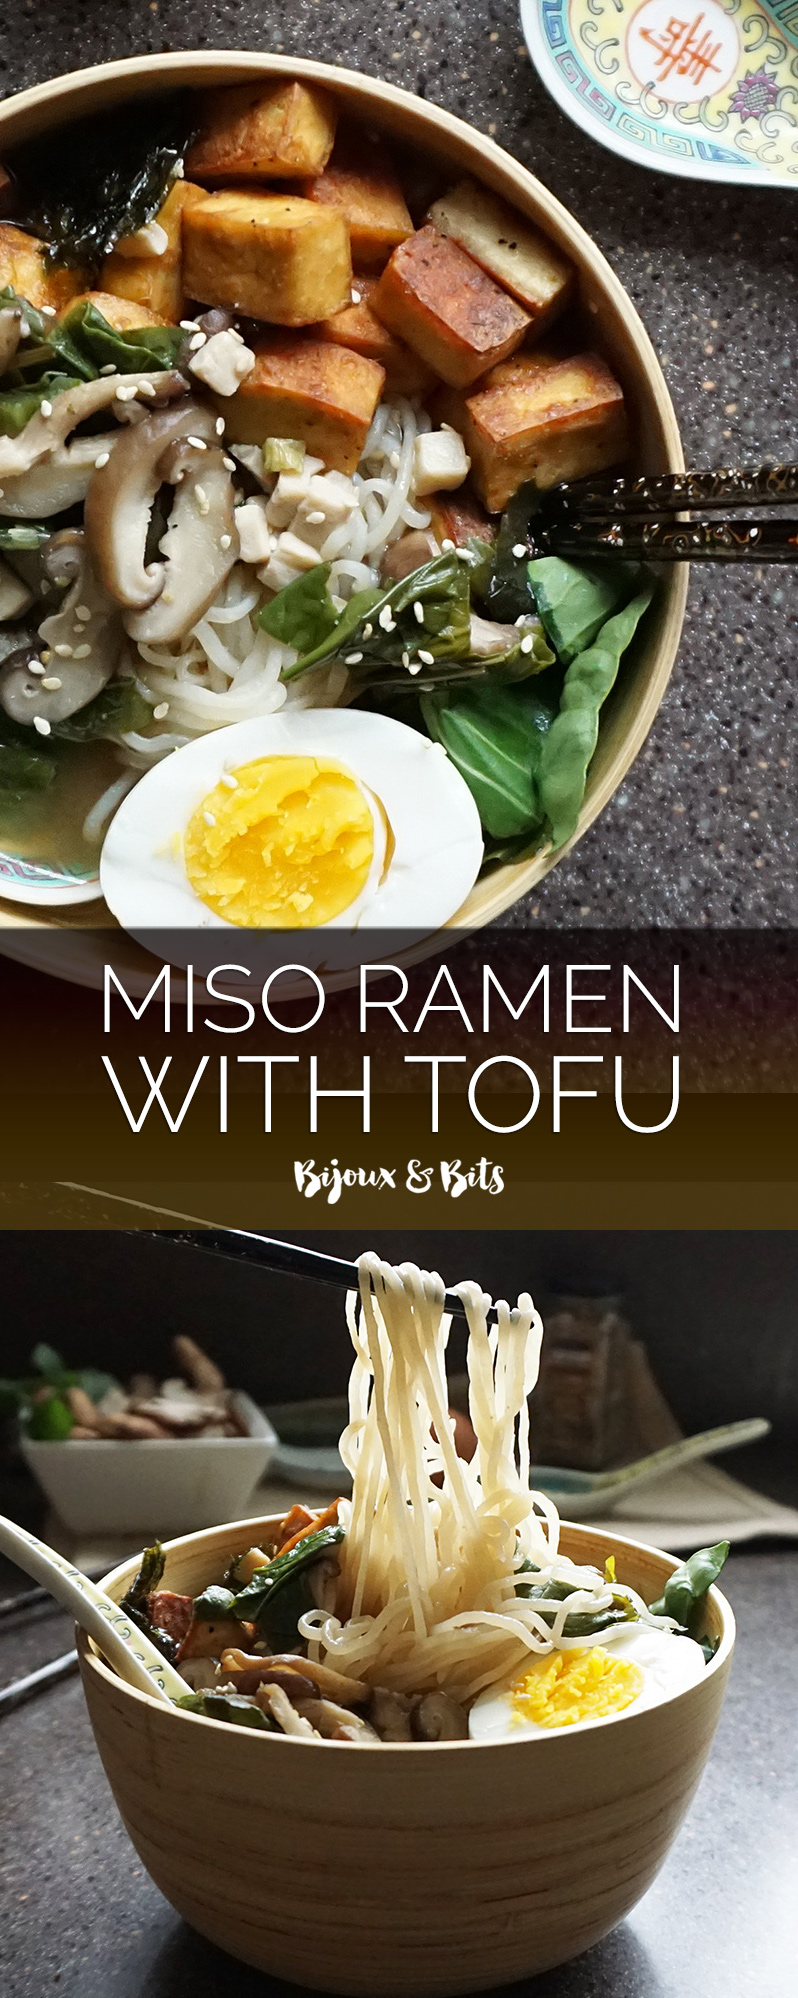 Miso ramen with tofu from @bijouxandbits #ramen #asian